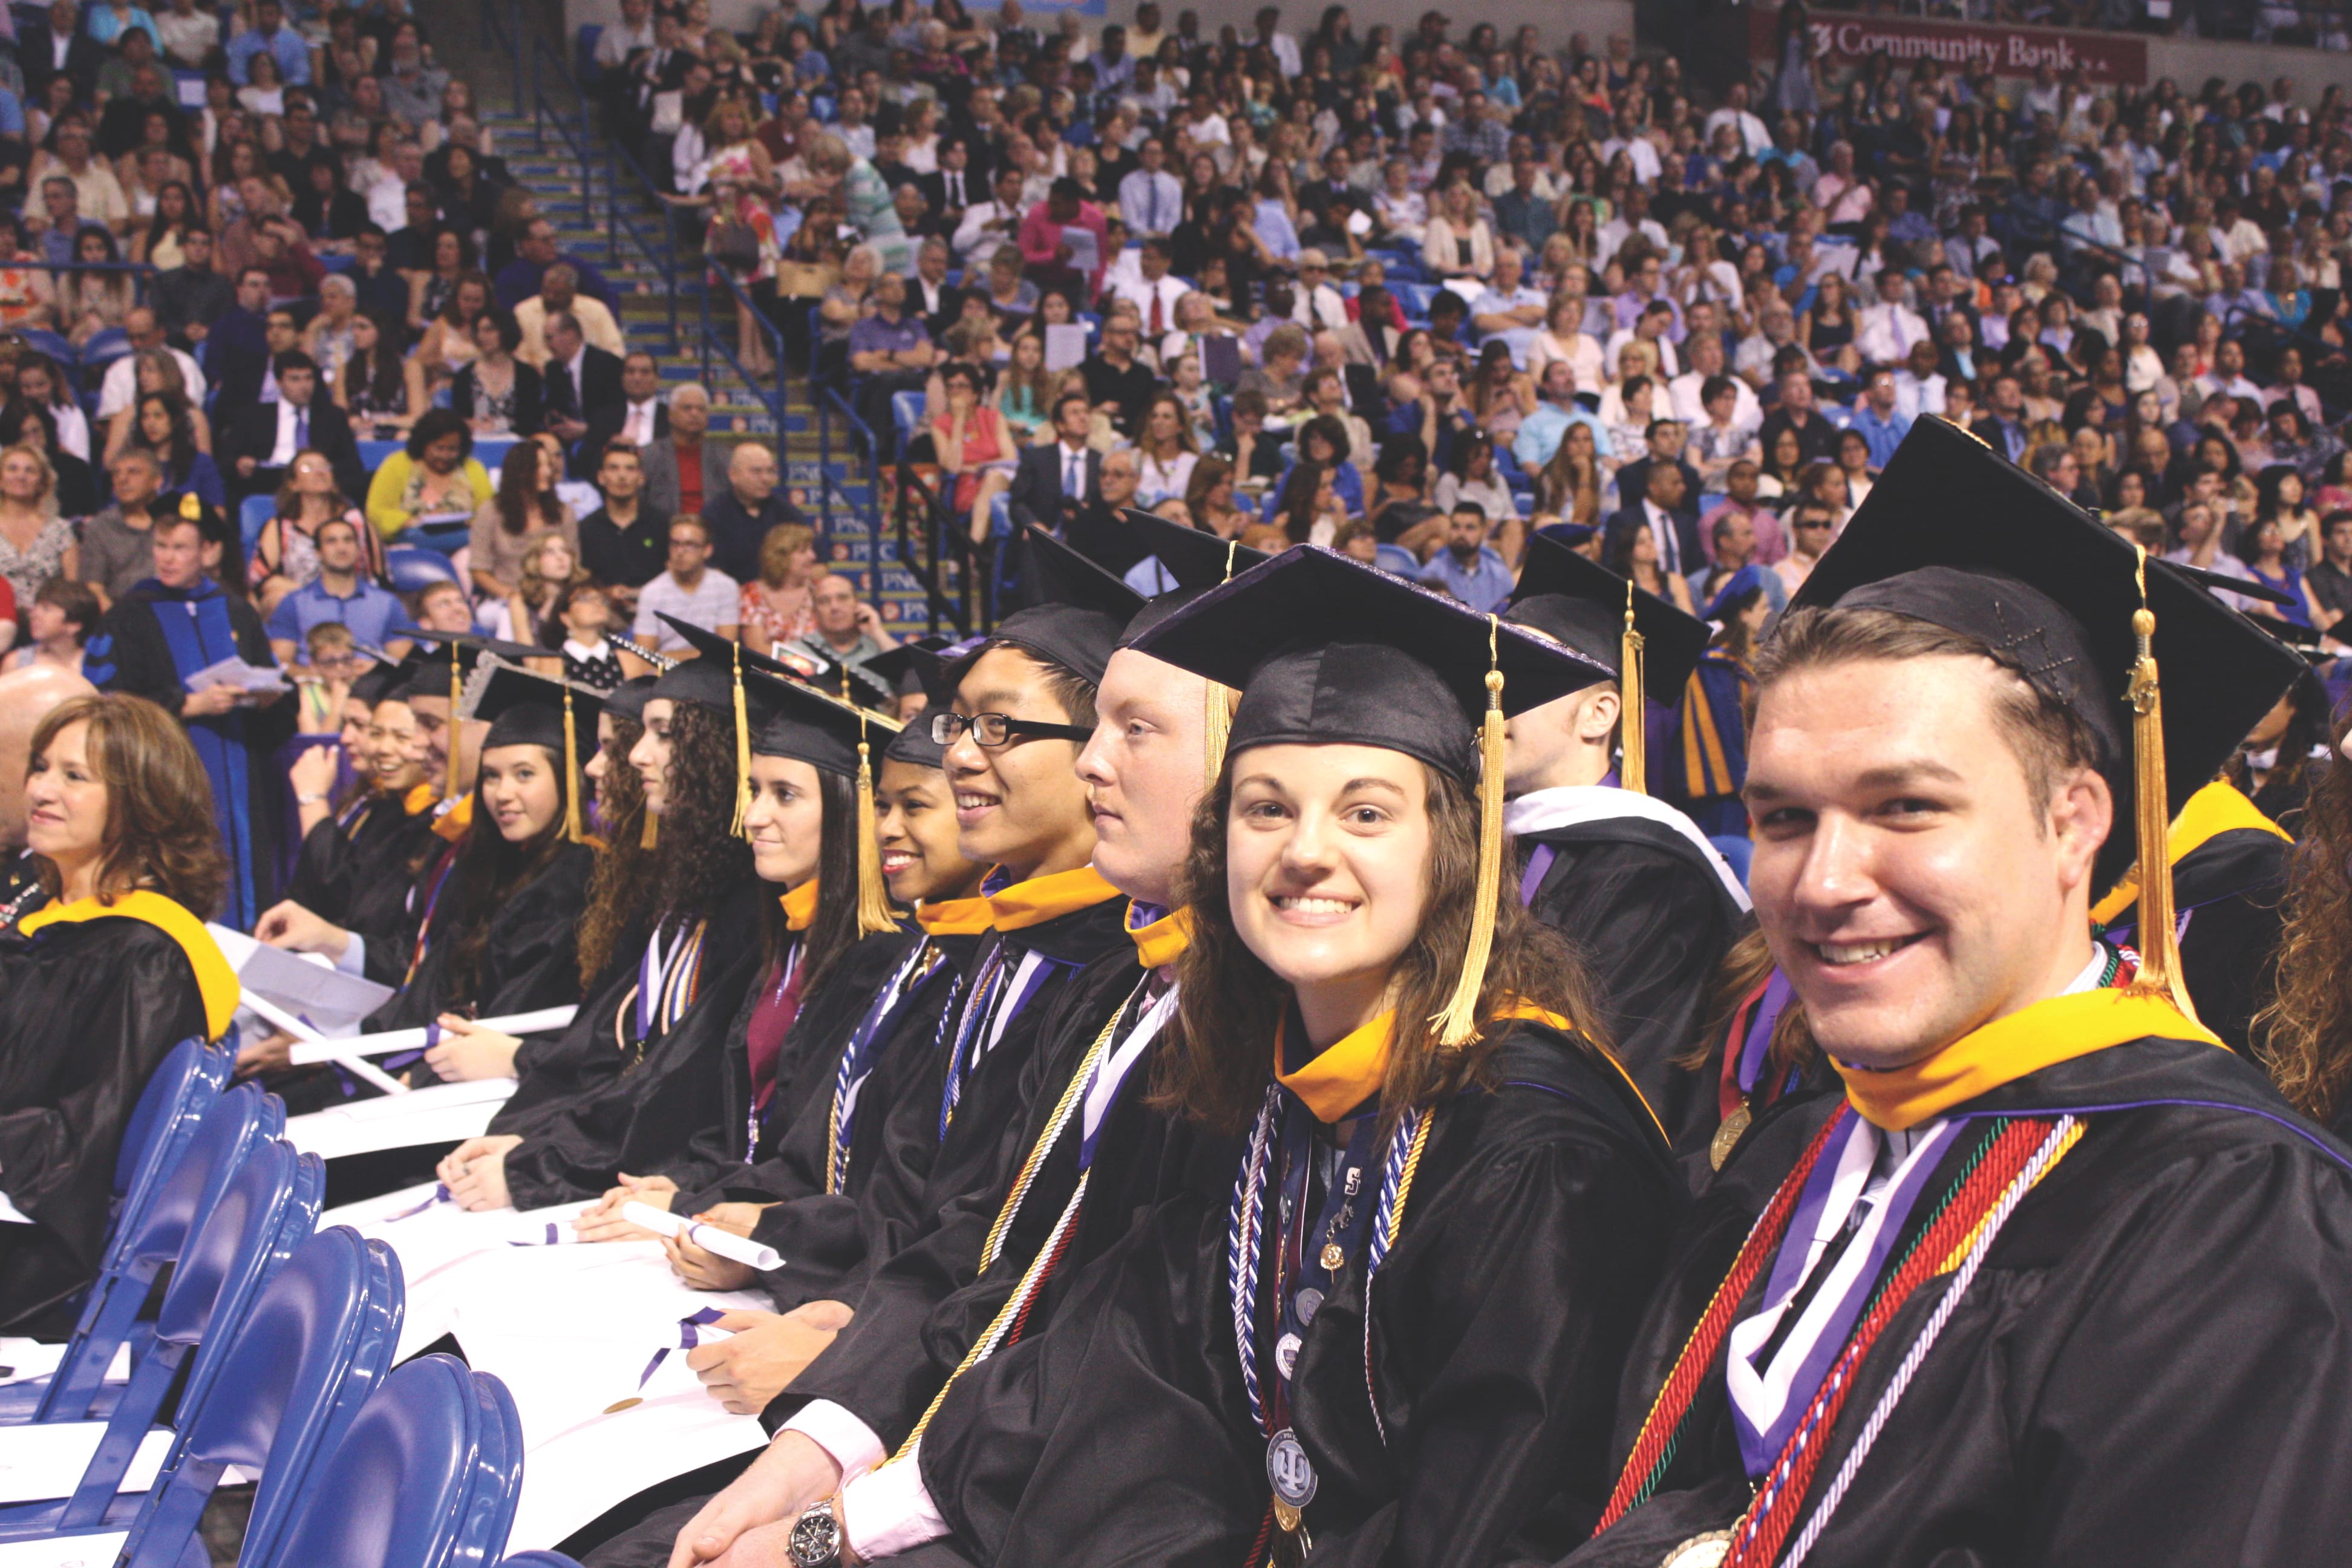 Students Smiling at Graduation